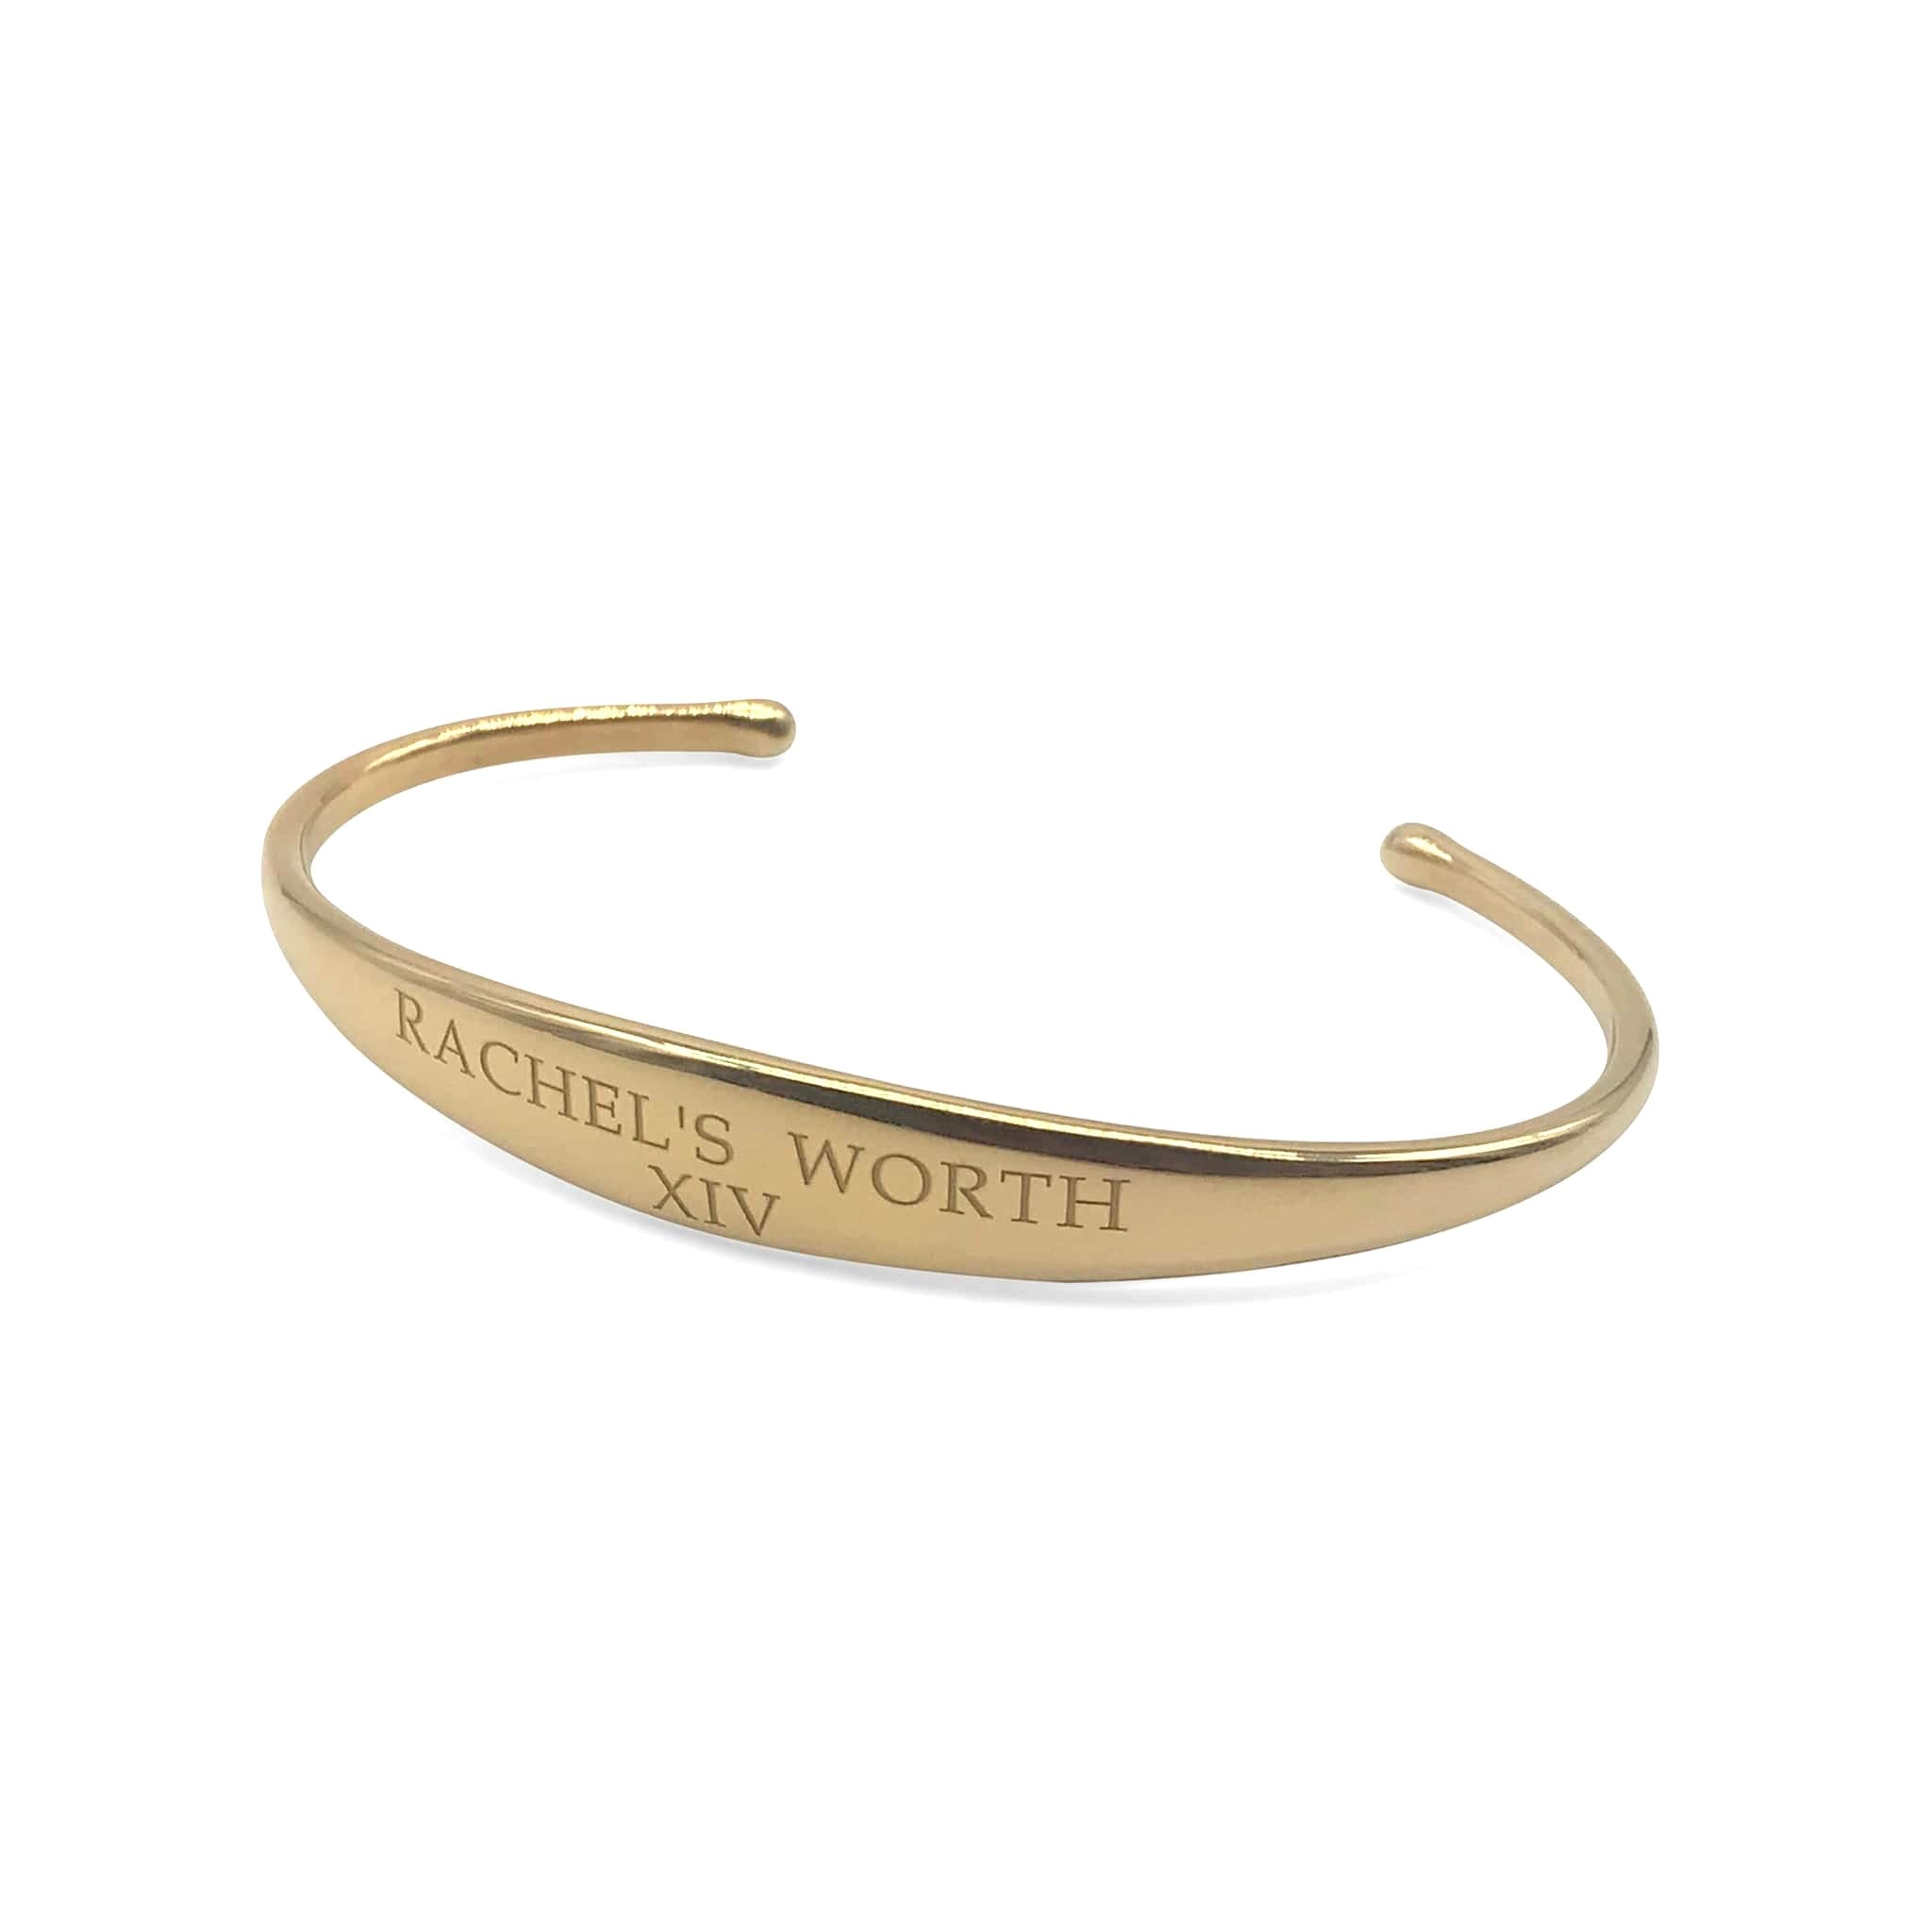 RW XIV Cuff Bracelet in Gold